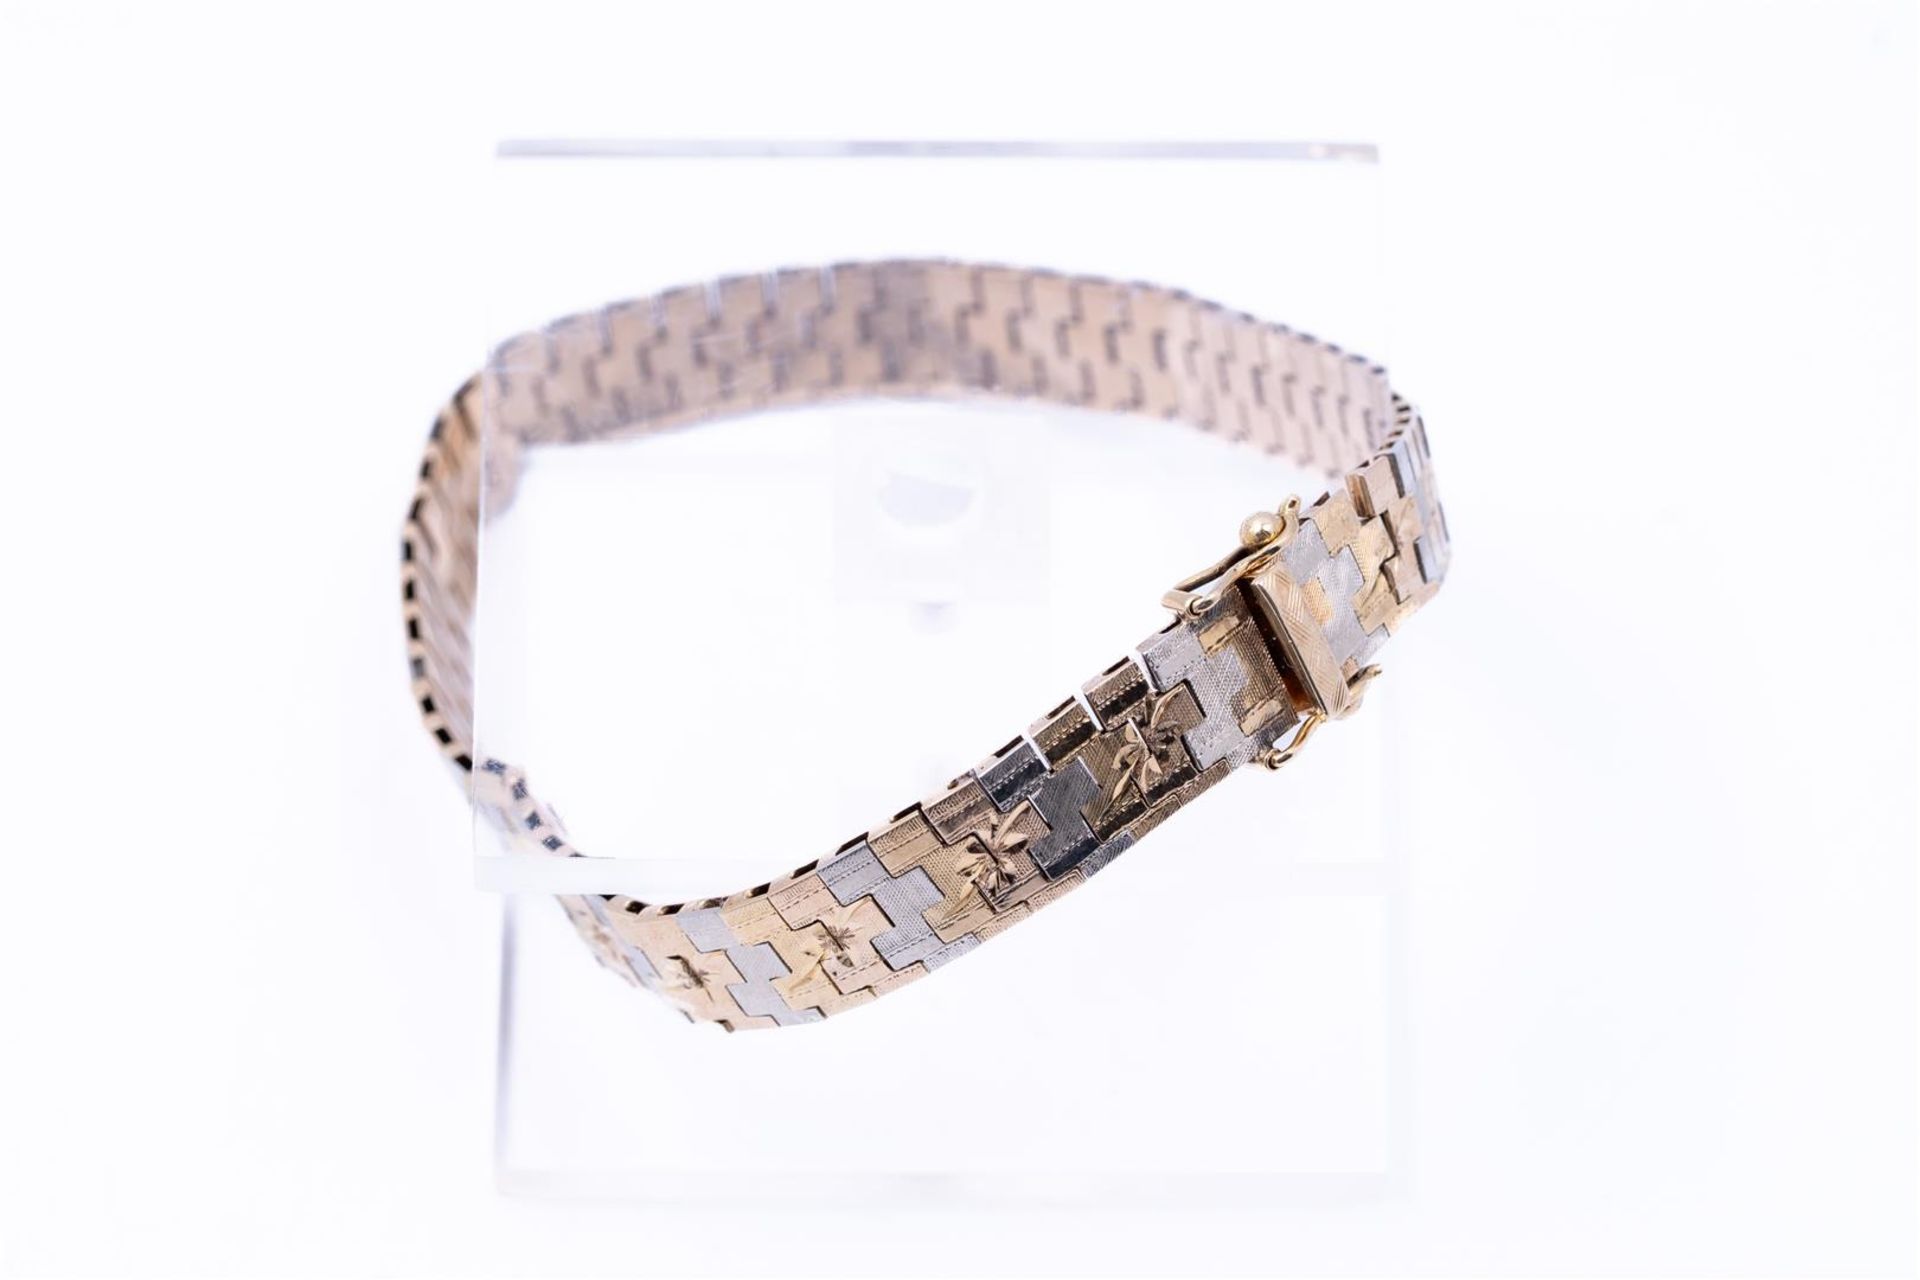 14kt bicolor gold bracelet. The bracelet has a beautiful decoration at the top of a flower motif. Th